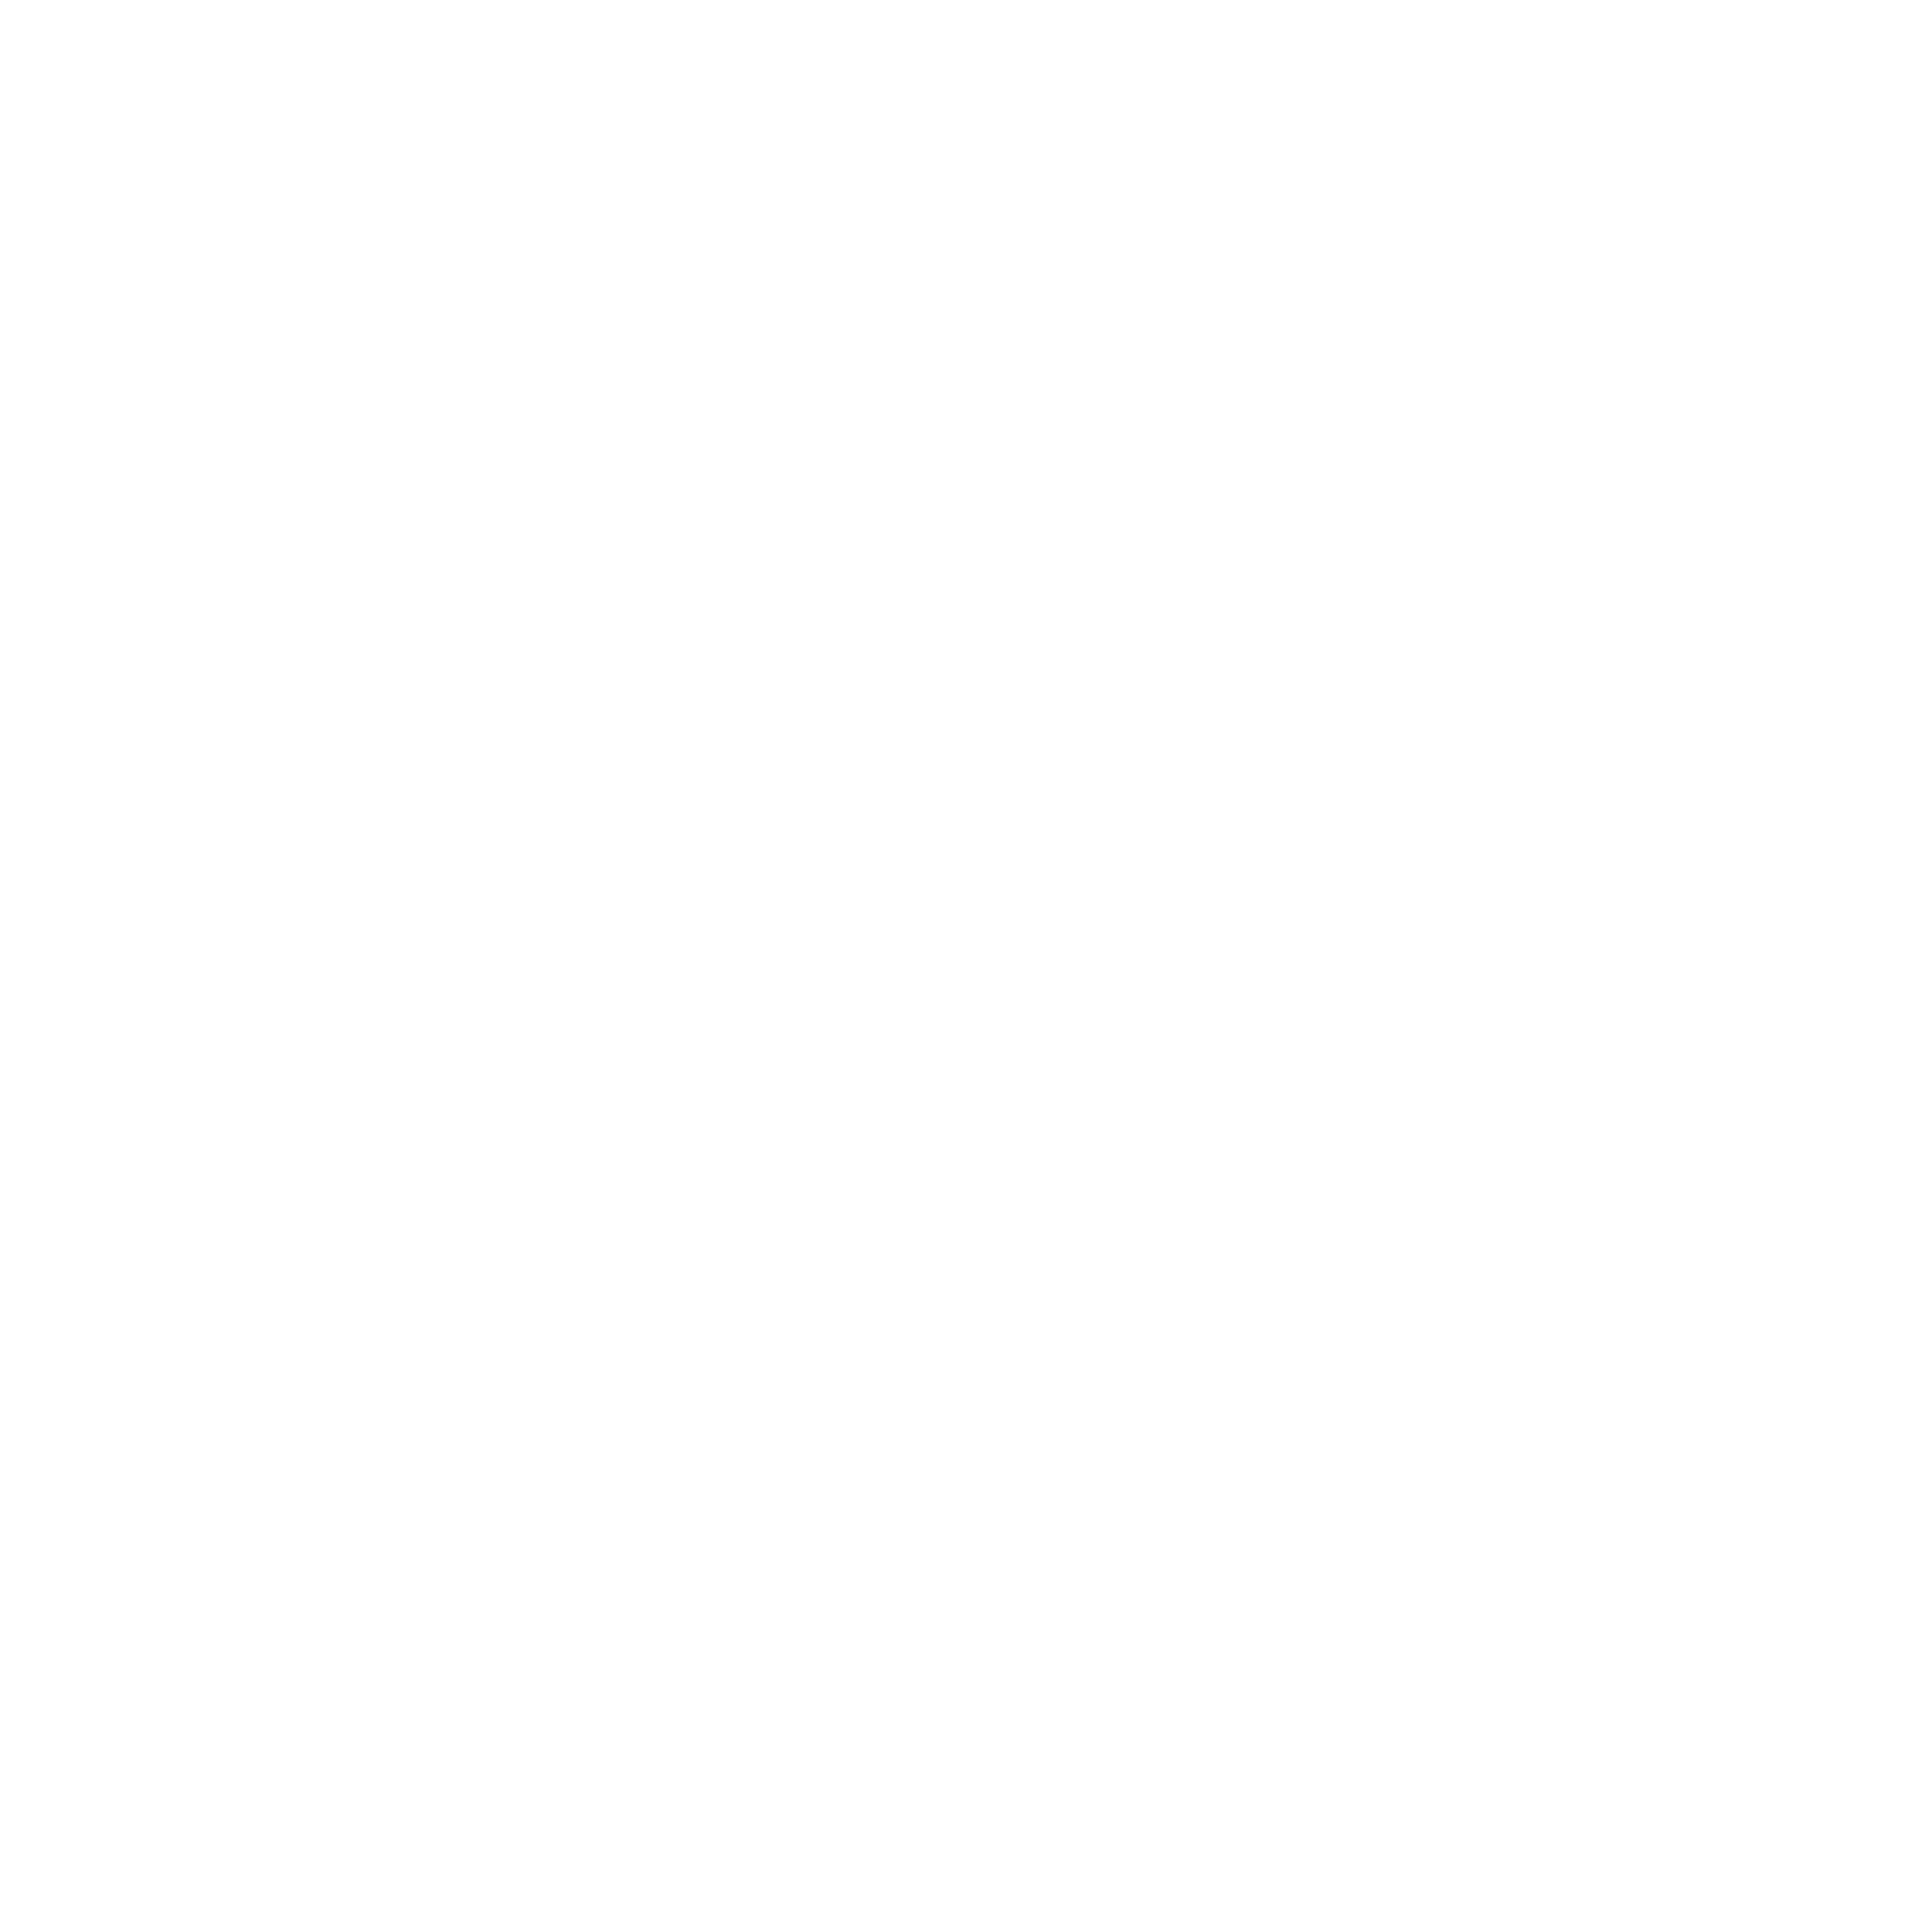 lolfreak8995